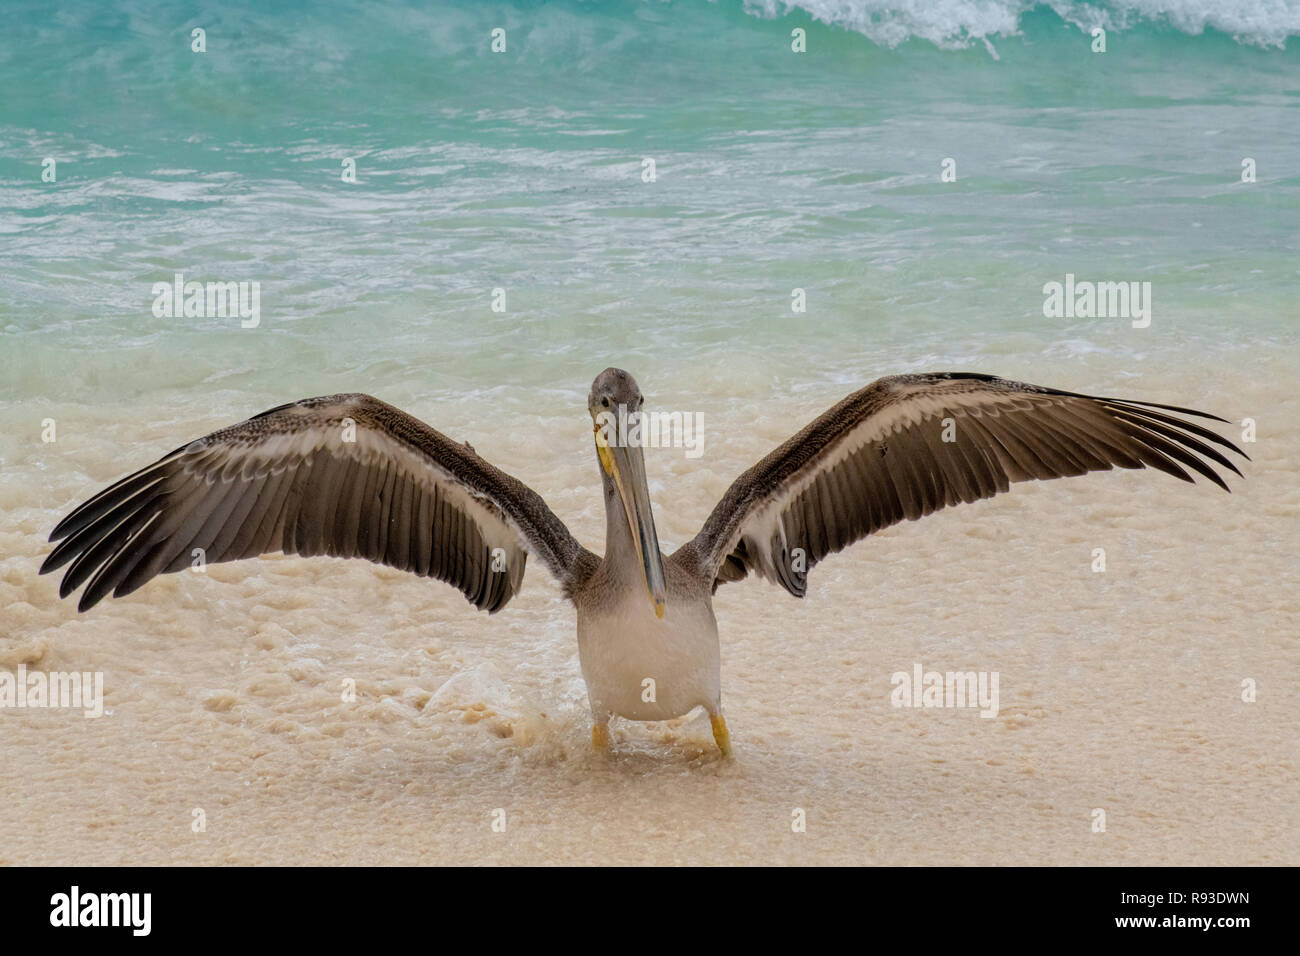 Pelikan - Brauner Pelikan, Pelecanus occidentalis / Pelecanidae spritzt Wasser Vogel w/große Schnabel in Aruba / Karibik Insel - Coastal Sea Bird Stockfoto